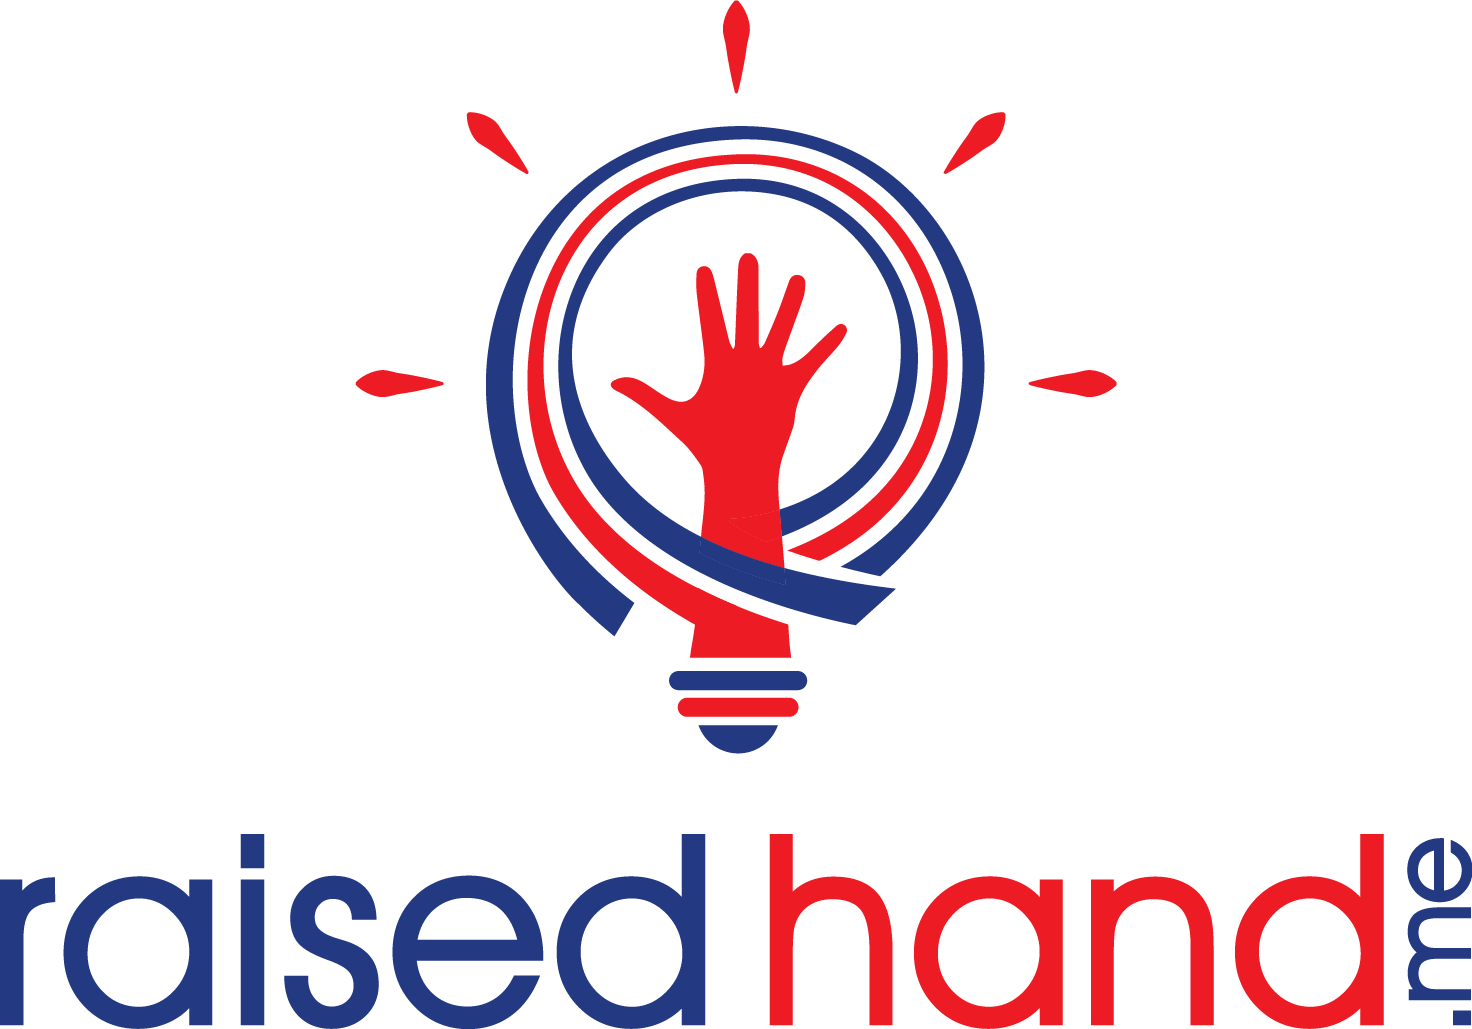 Raised Hand logo